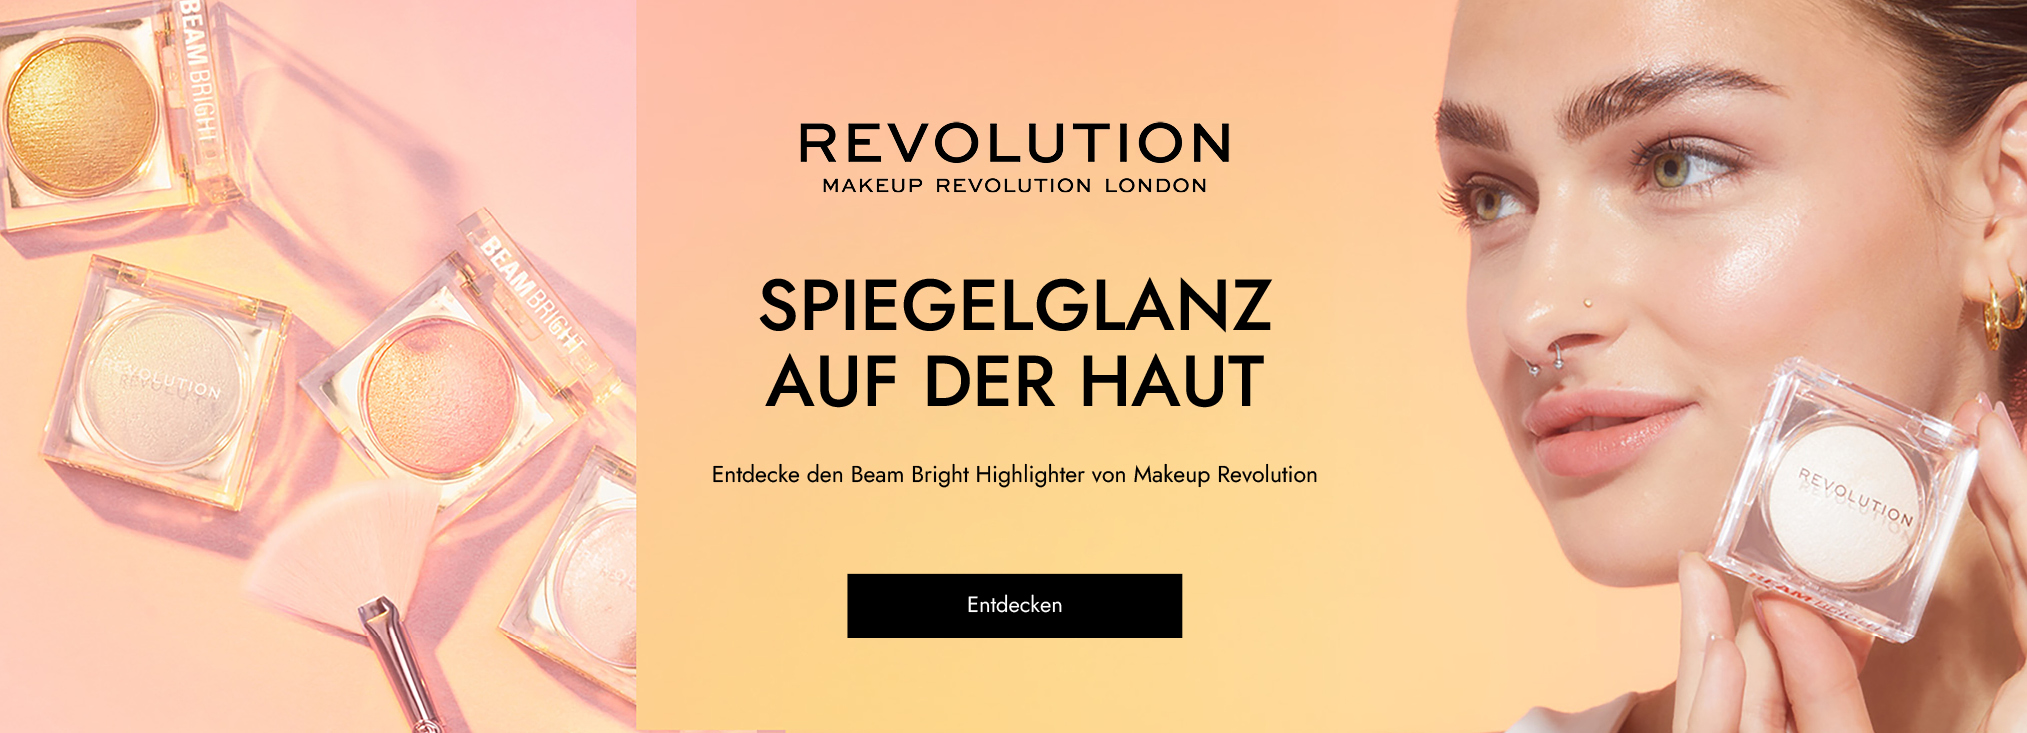 Revolution_makeup